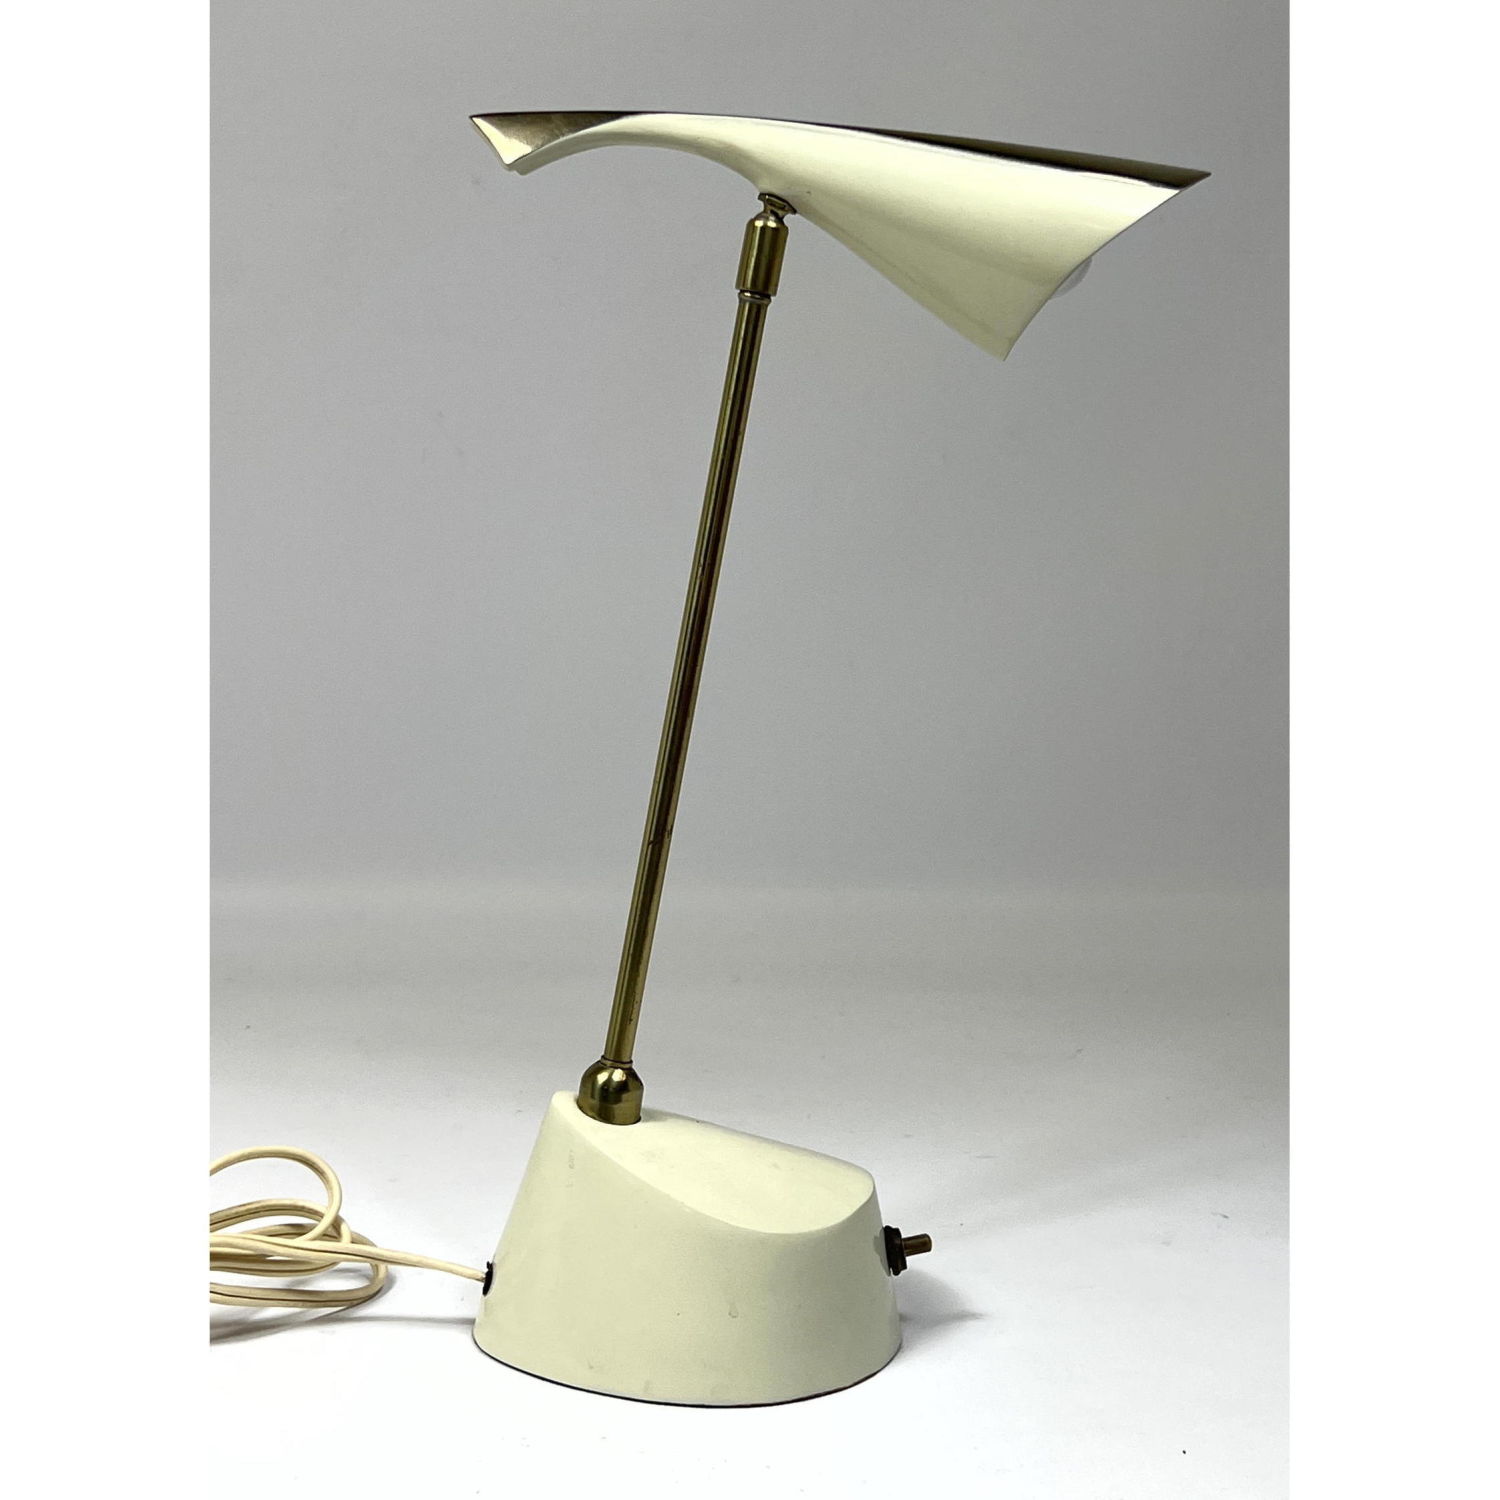 Laurel adjustable pivot desk lamp.